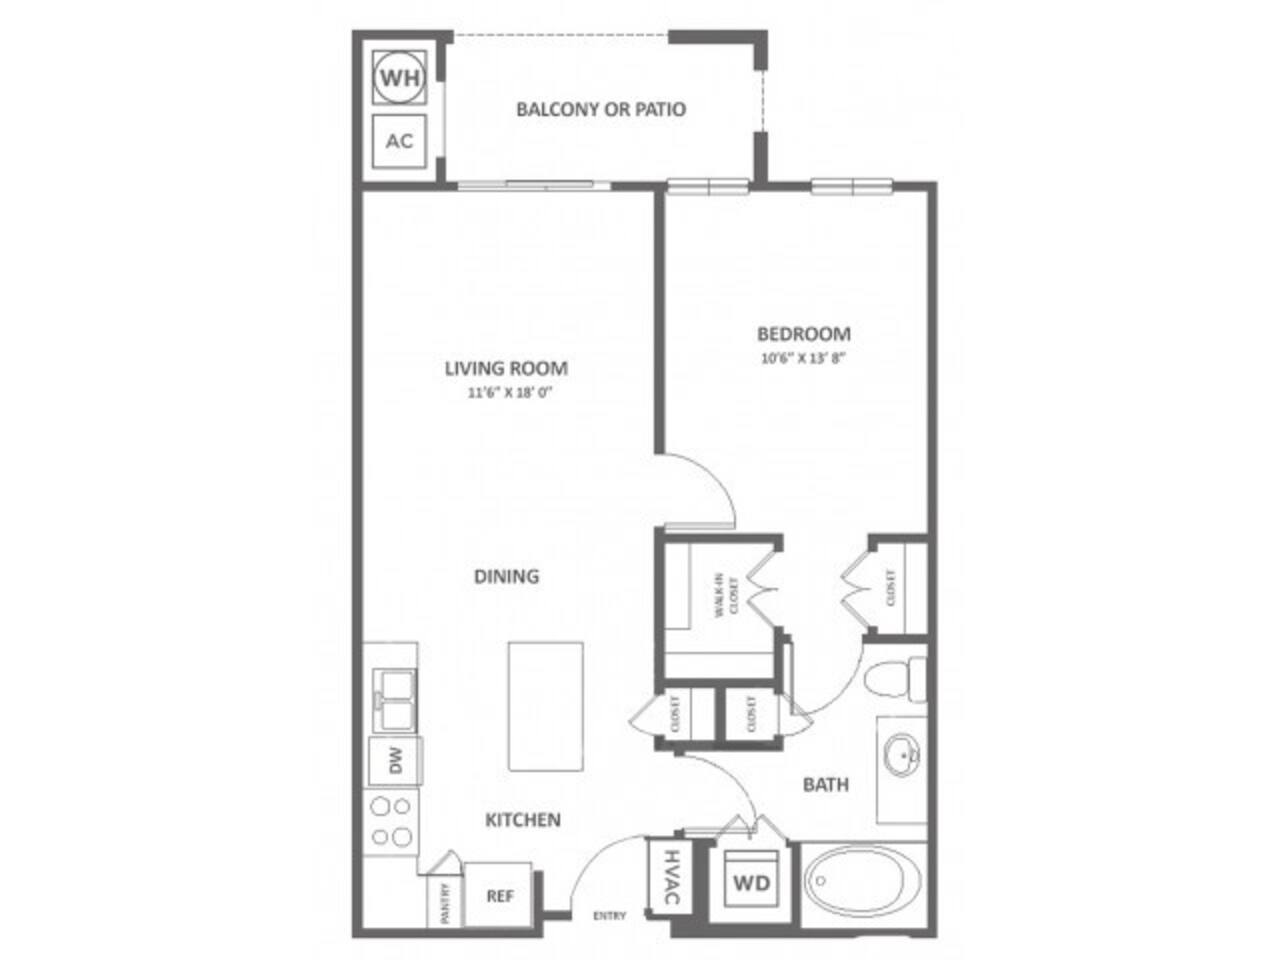 Floorplan diagram for 1 Bedroom 1 Bath Kitchen Island (690 SF), showing 1 bedroom